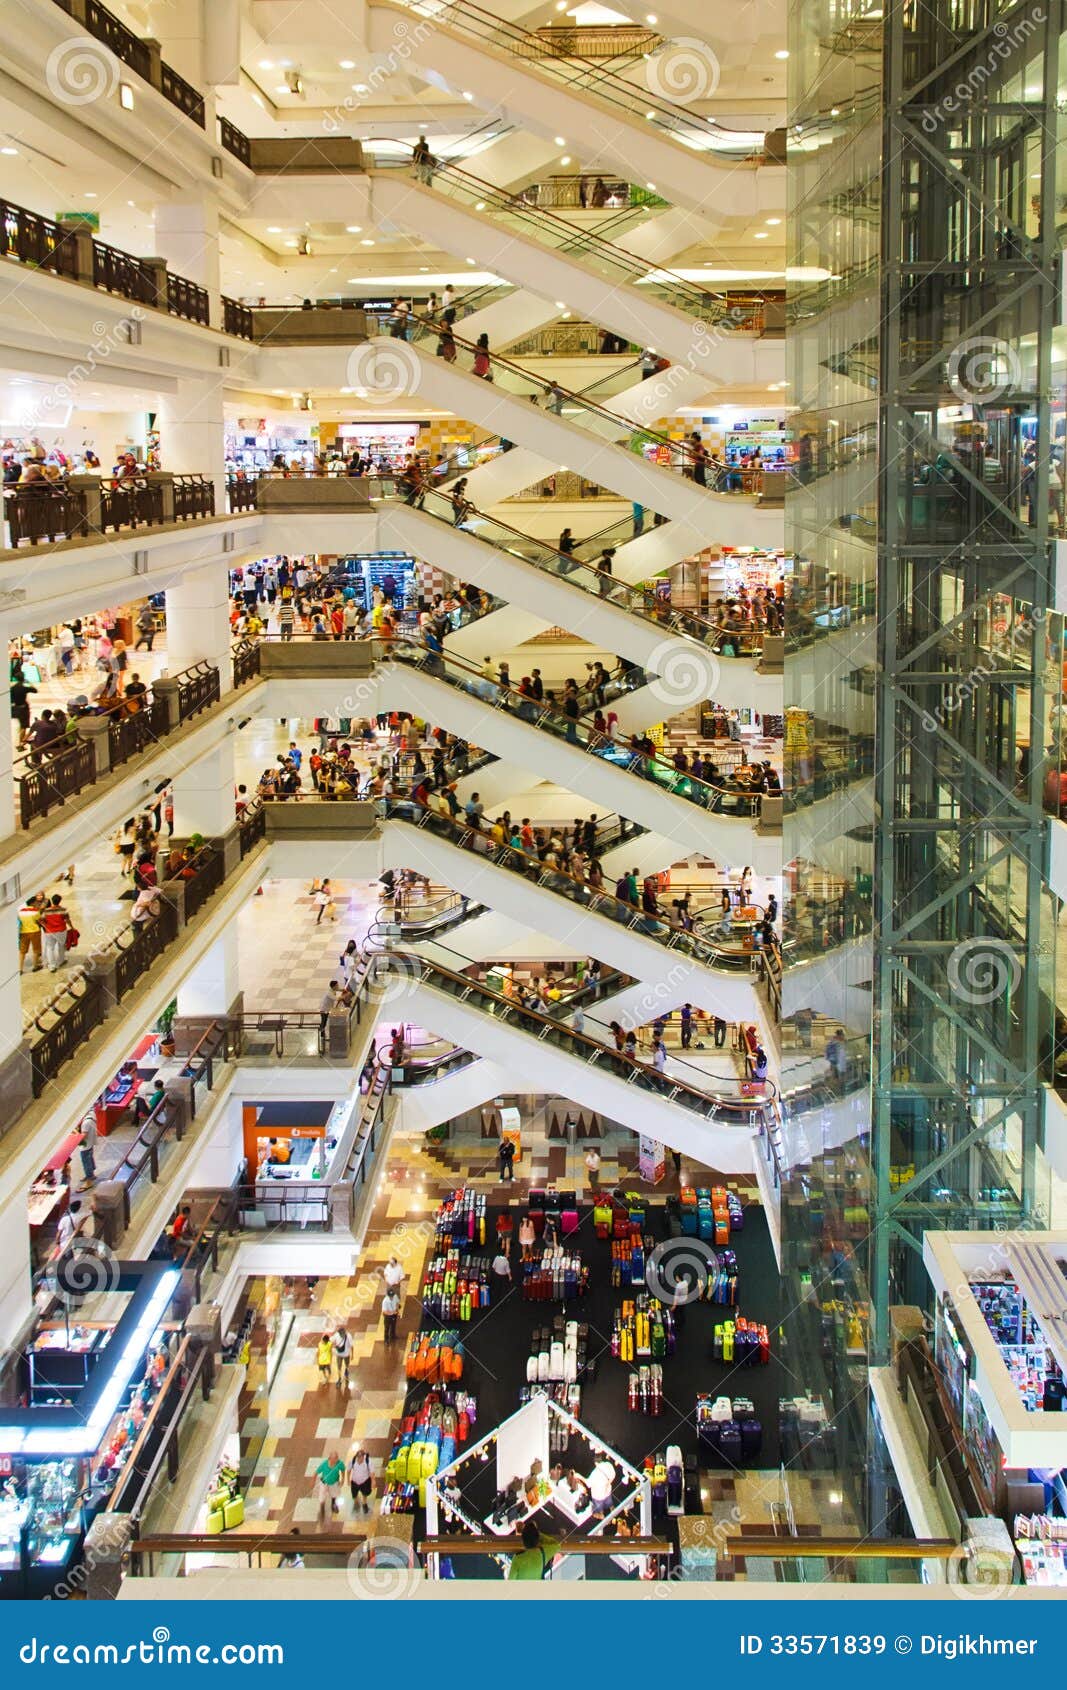 Shopping Mall at Kuala Lumpur Editorial Stock Image - Image of elegance,  architecture: 33571839